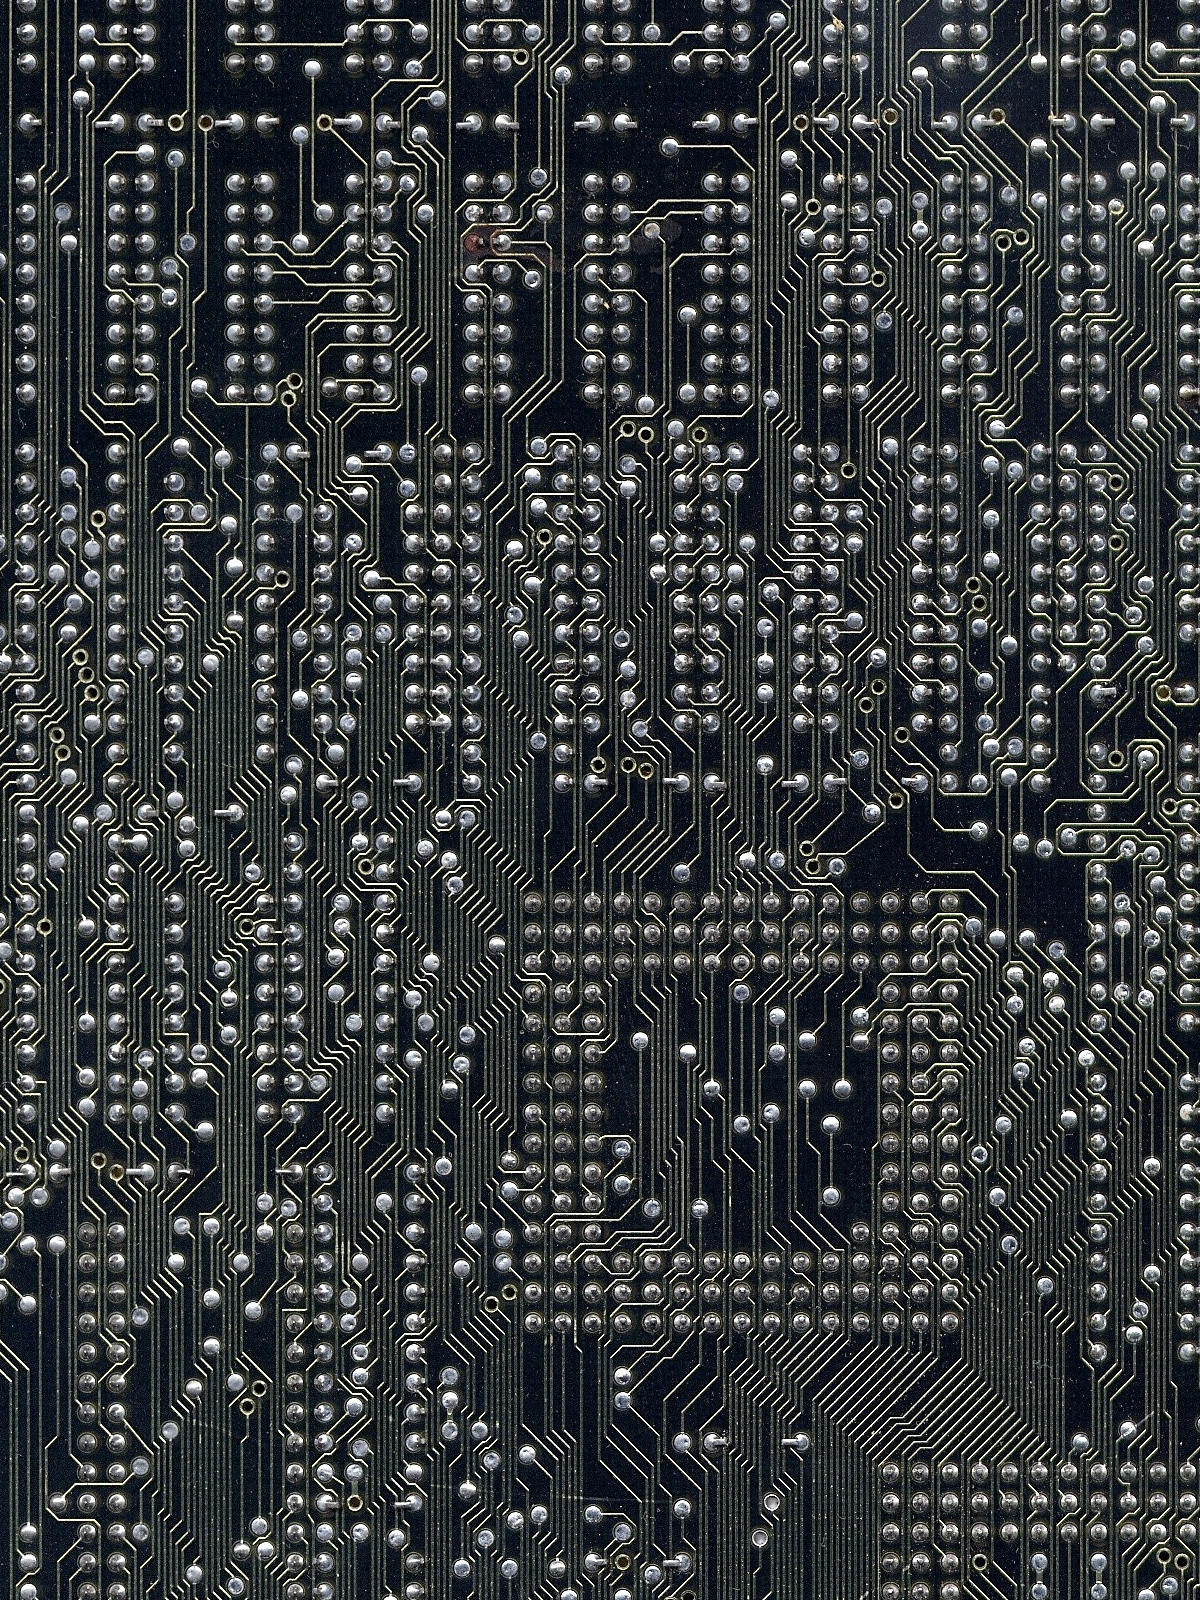 lb1-52 circuit board by bstocked on DeviantArt